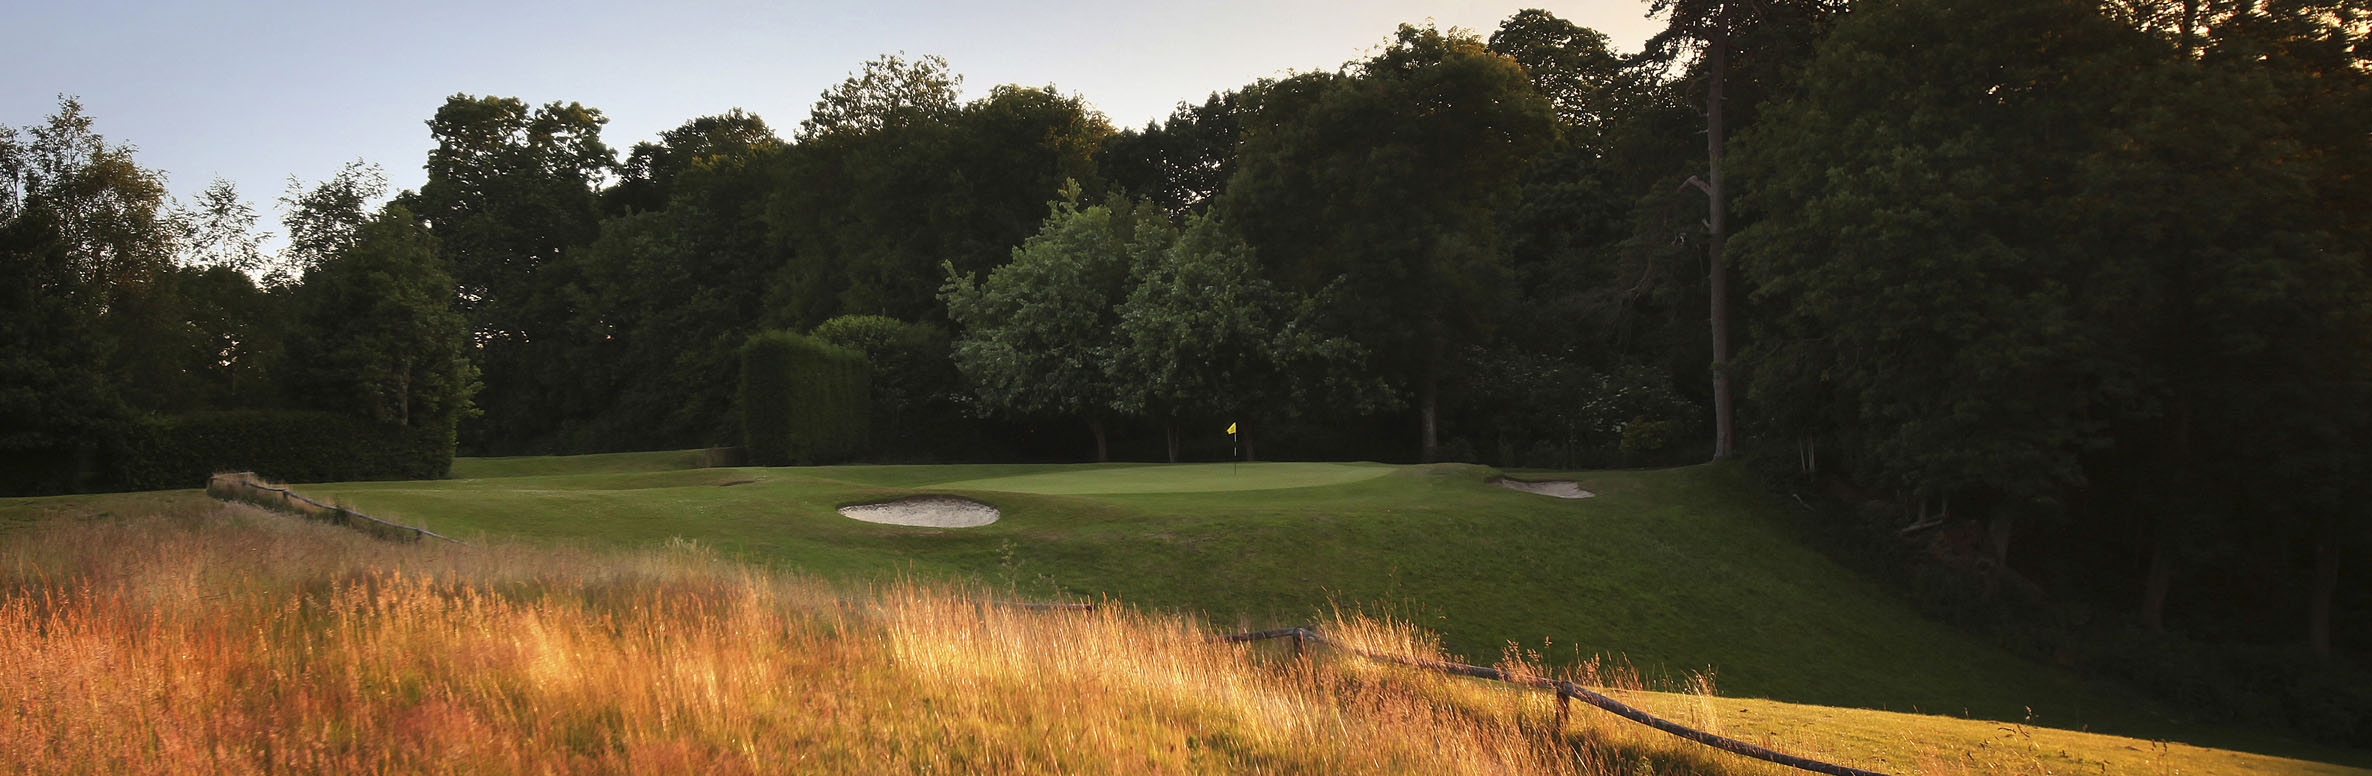 Golf Course Image - Haywards Heath Golf Club No. 7